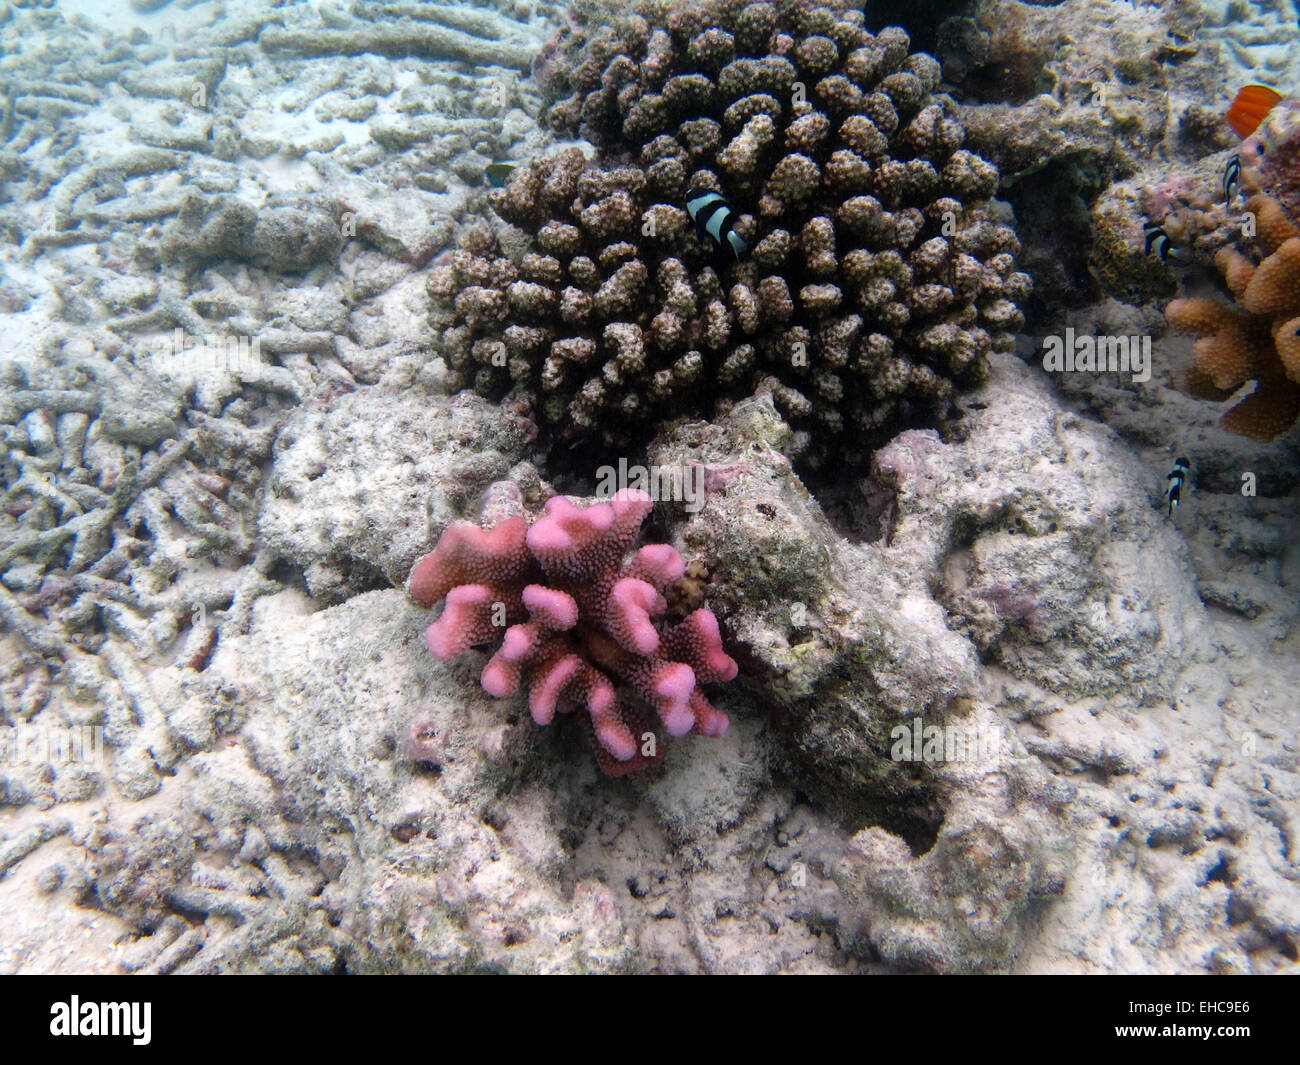 A Humbug damselfish or Whitetail dascyllus swimming around Acropora coral heads in the Maldives Stock Photo